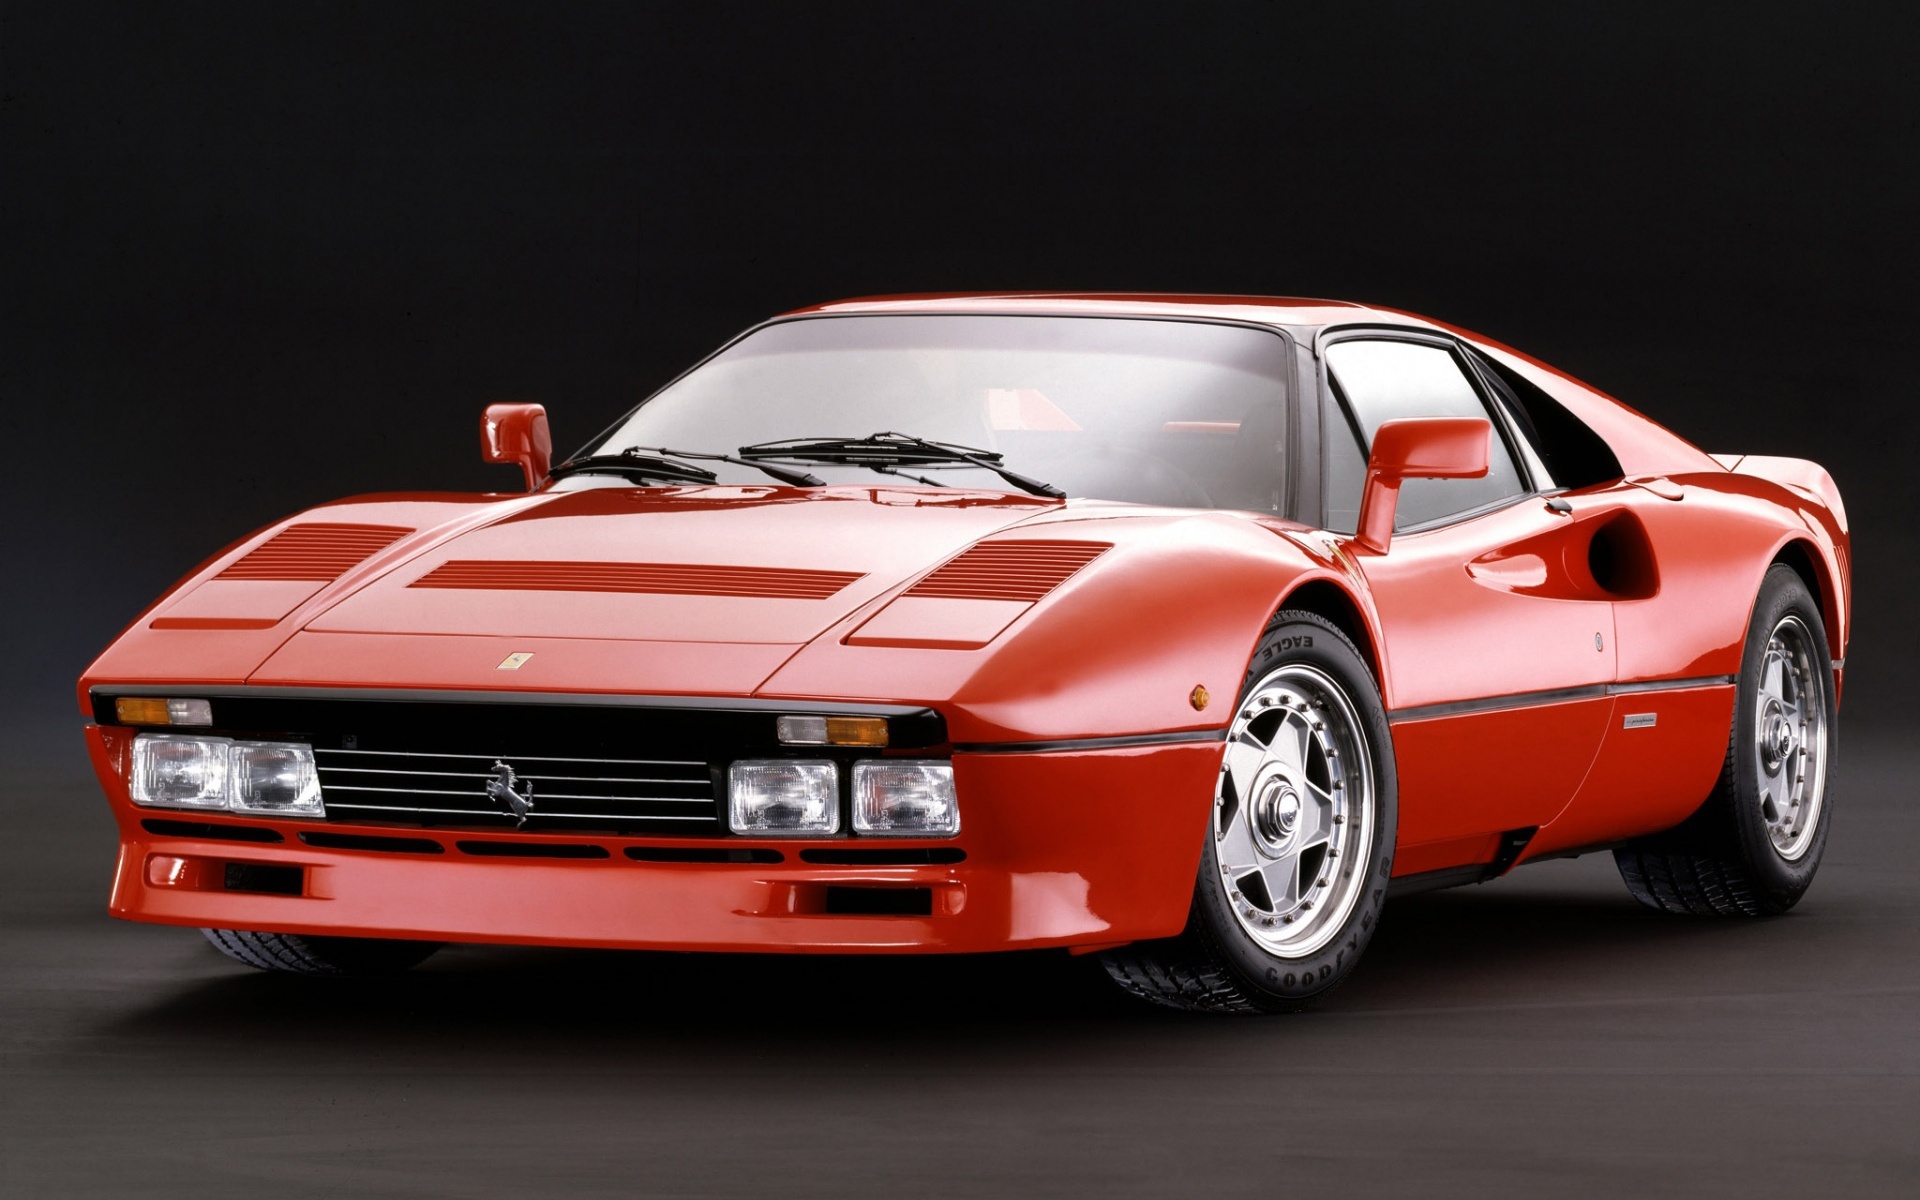 Ferrari 288 gto. Феррари GTO 1984. Феррари 288 GTO. Ferrari 288 GTO 1984. Ferrari 280 GTO.